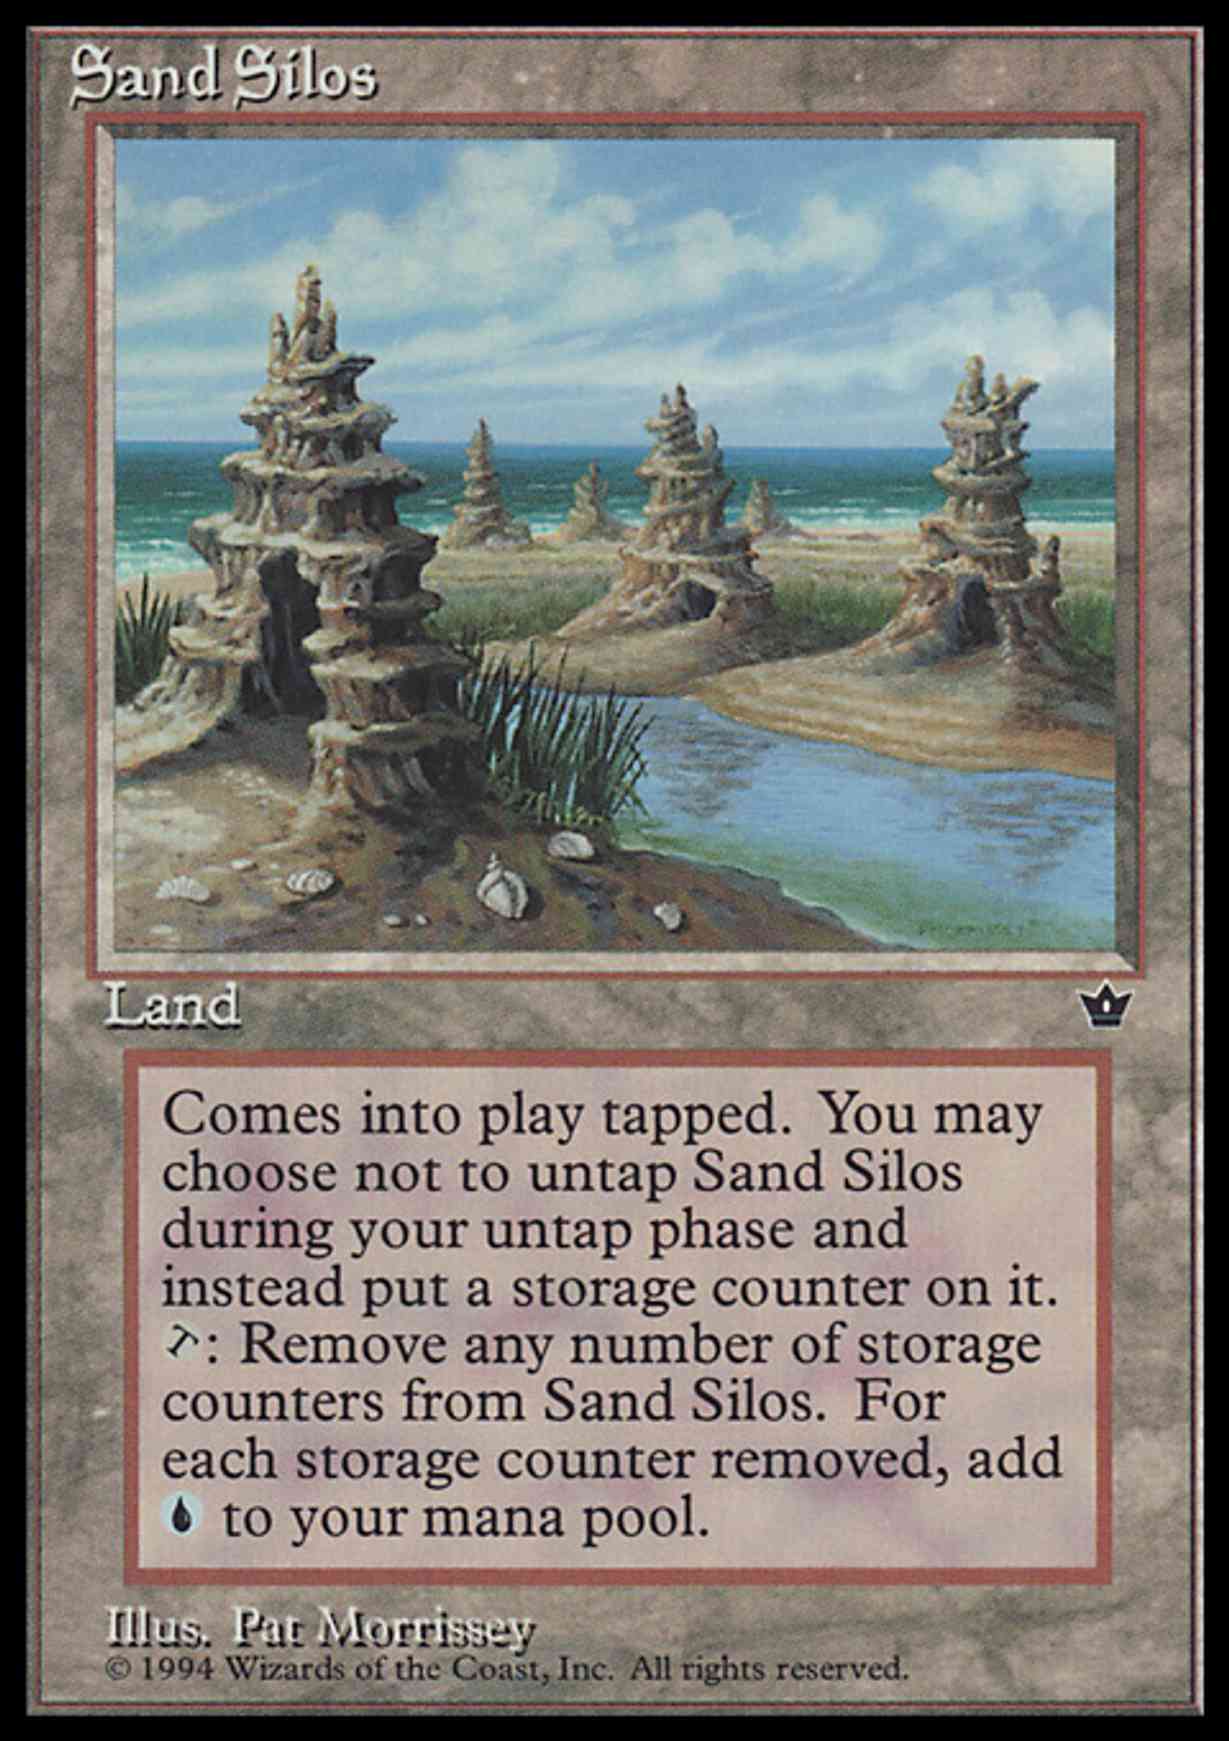 Sand Silos magic card front